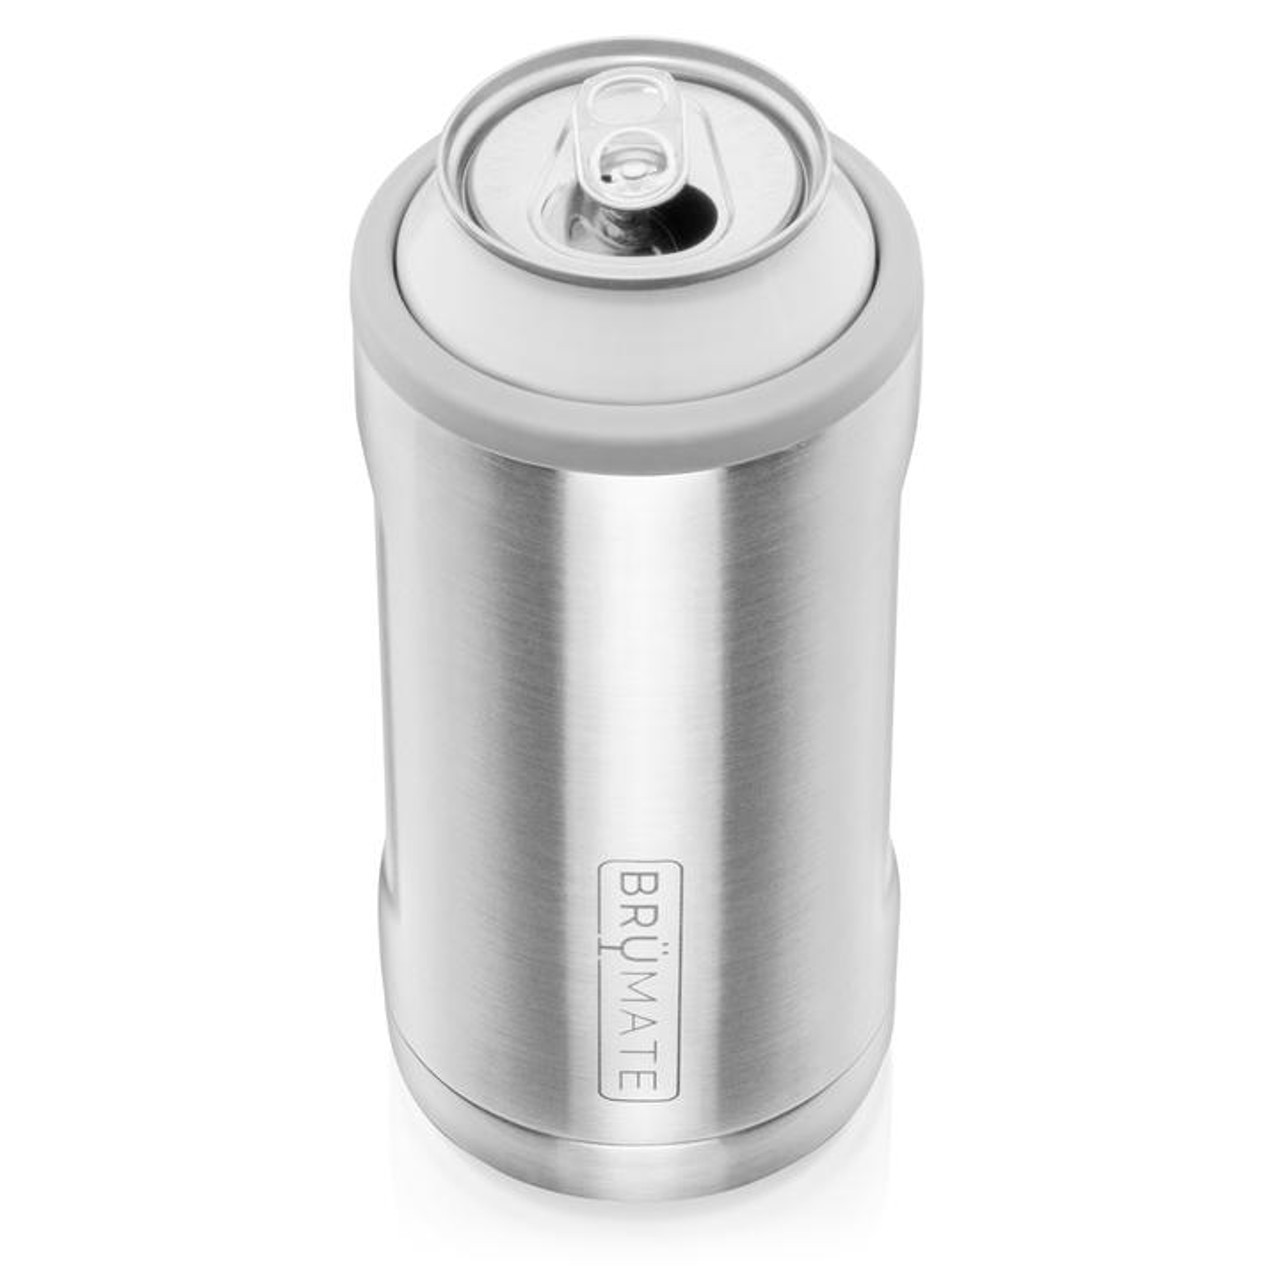 Brumate Hopsulator TRiO 3-in-1 can-cooler - Blush 